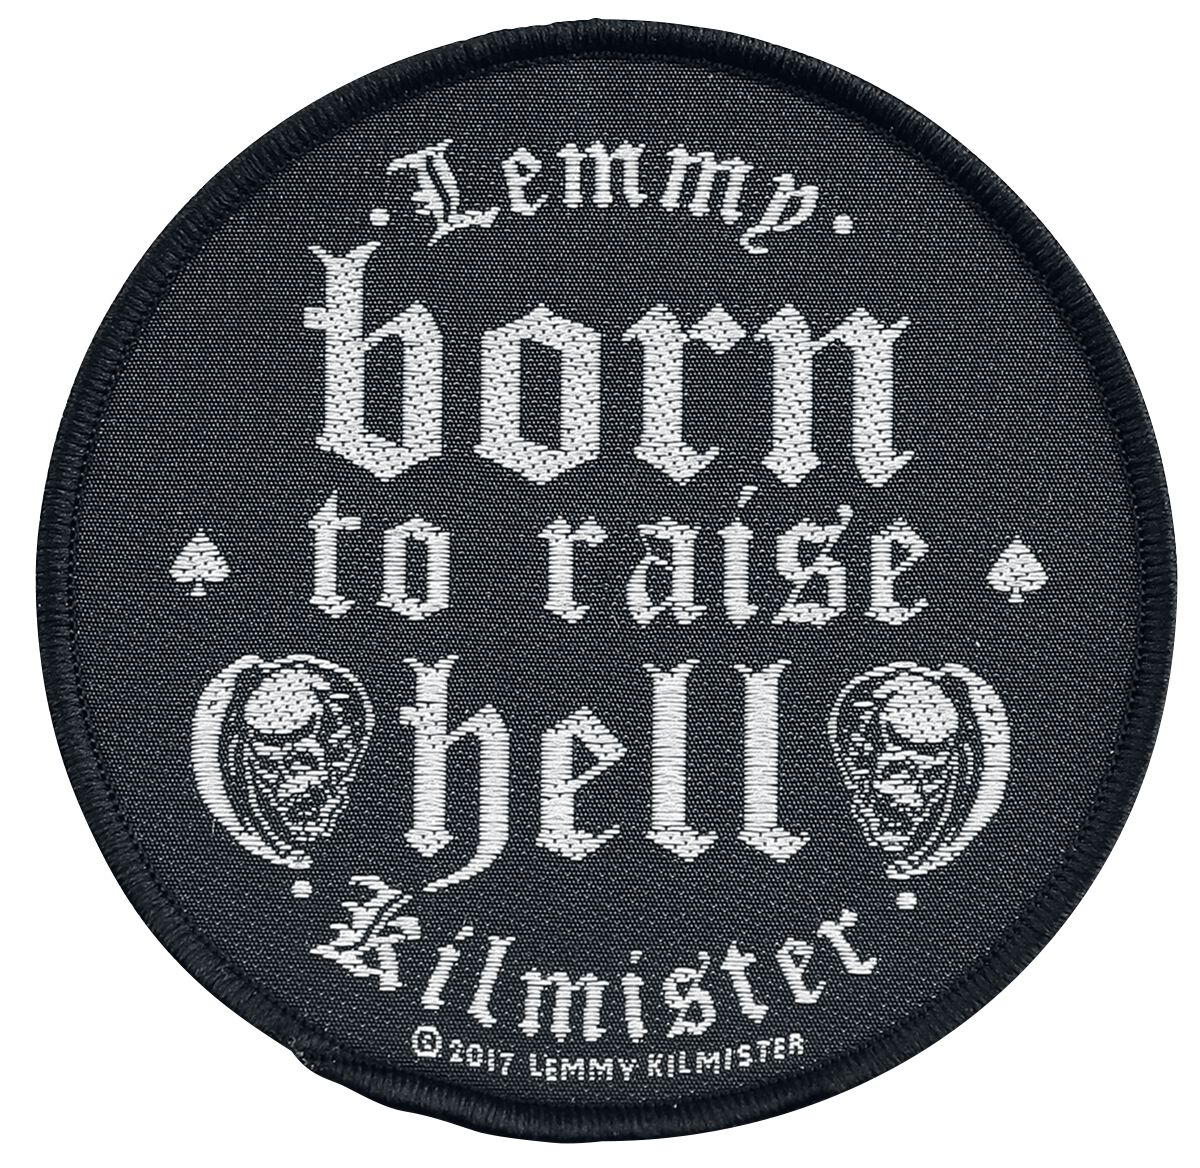 Motörhead - Lemmy Kilmister - Born to raise hell - Patch - schwarz|weiß